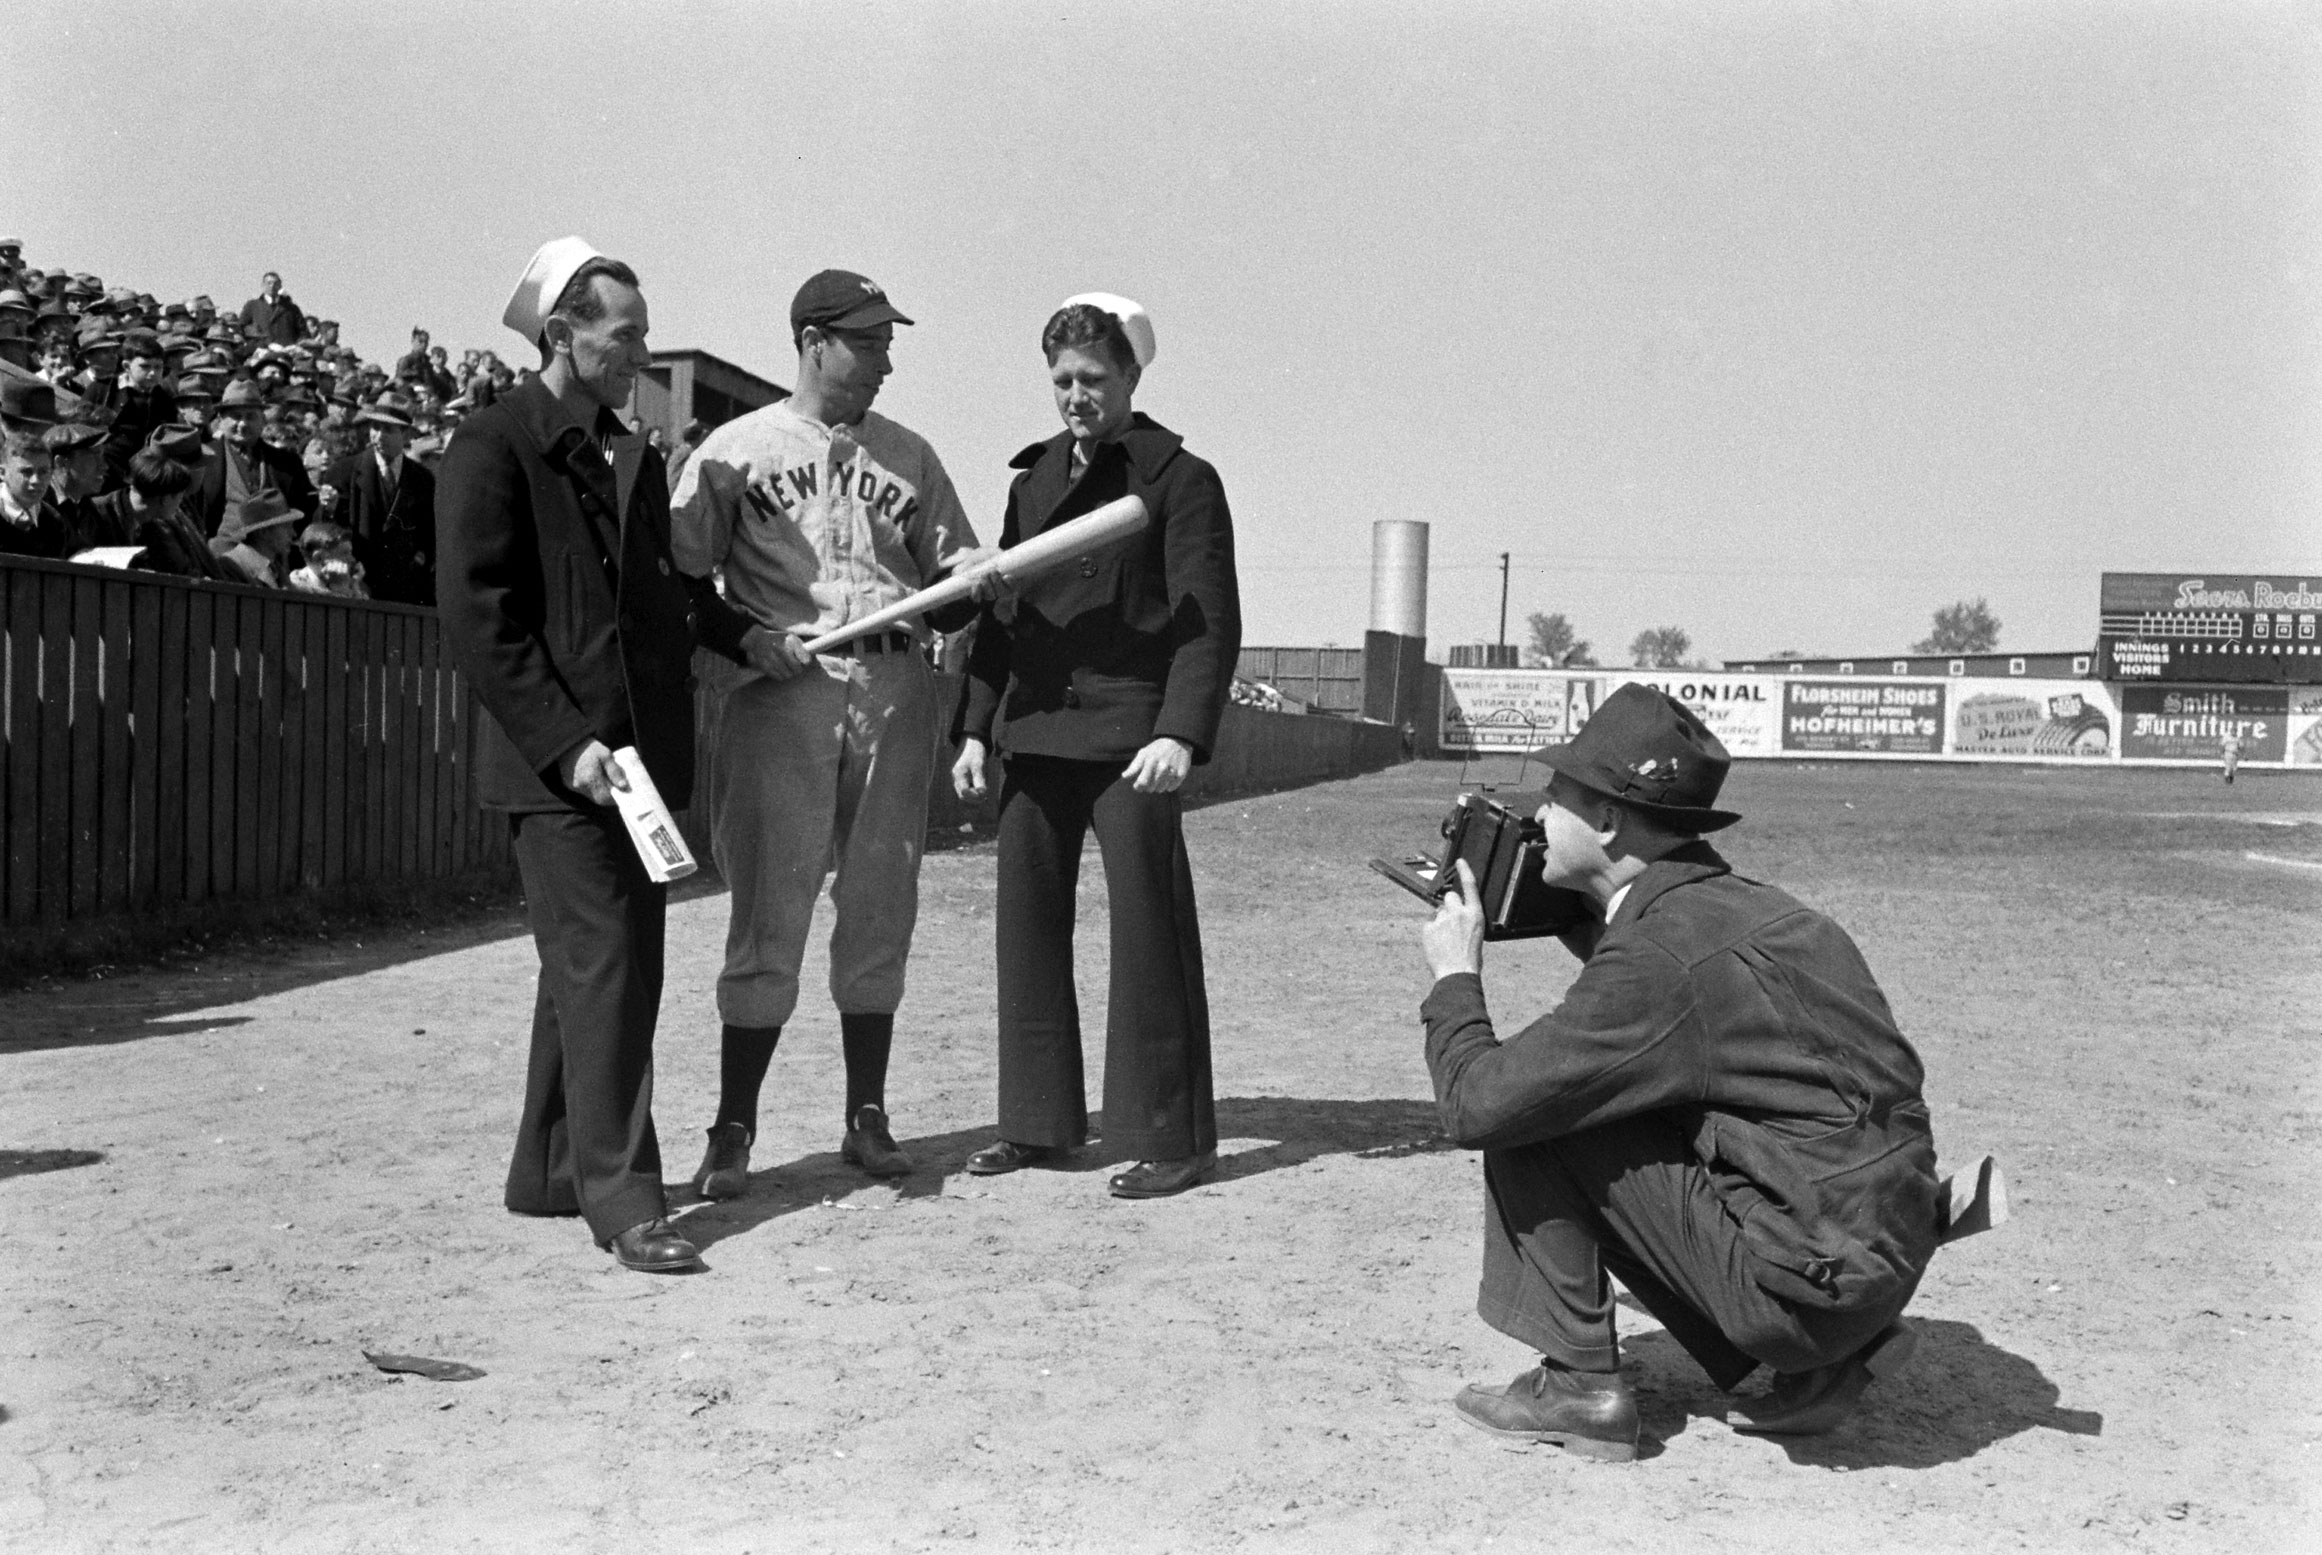 Joe DiMaggio with sailors, 1939.